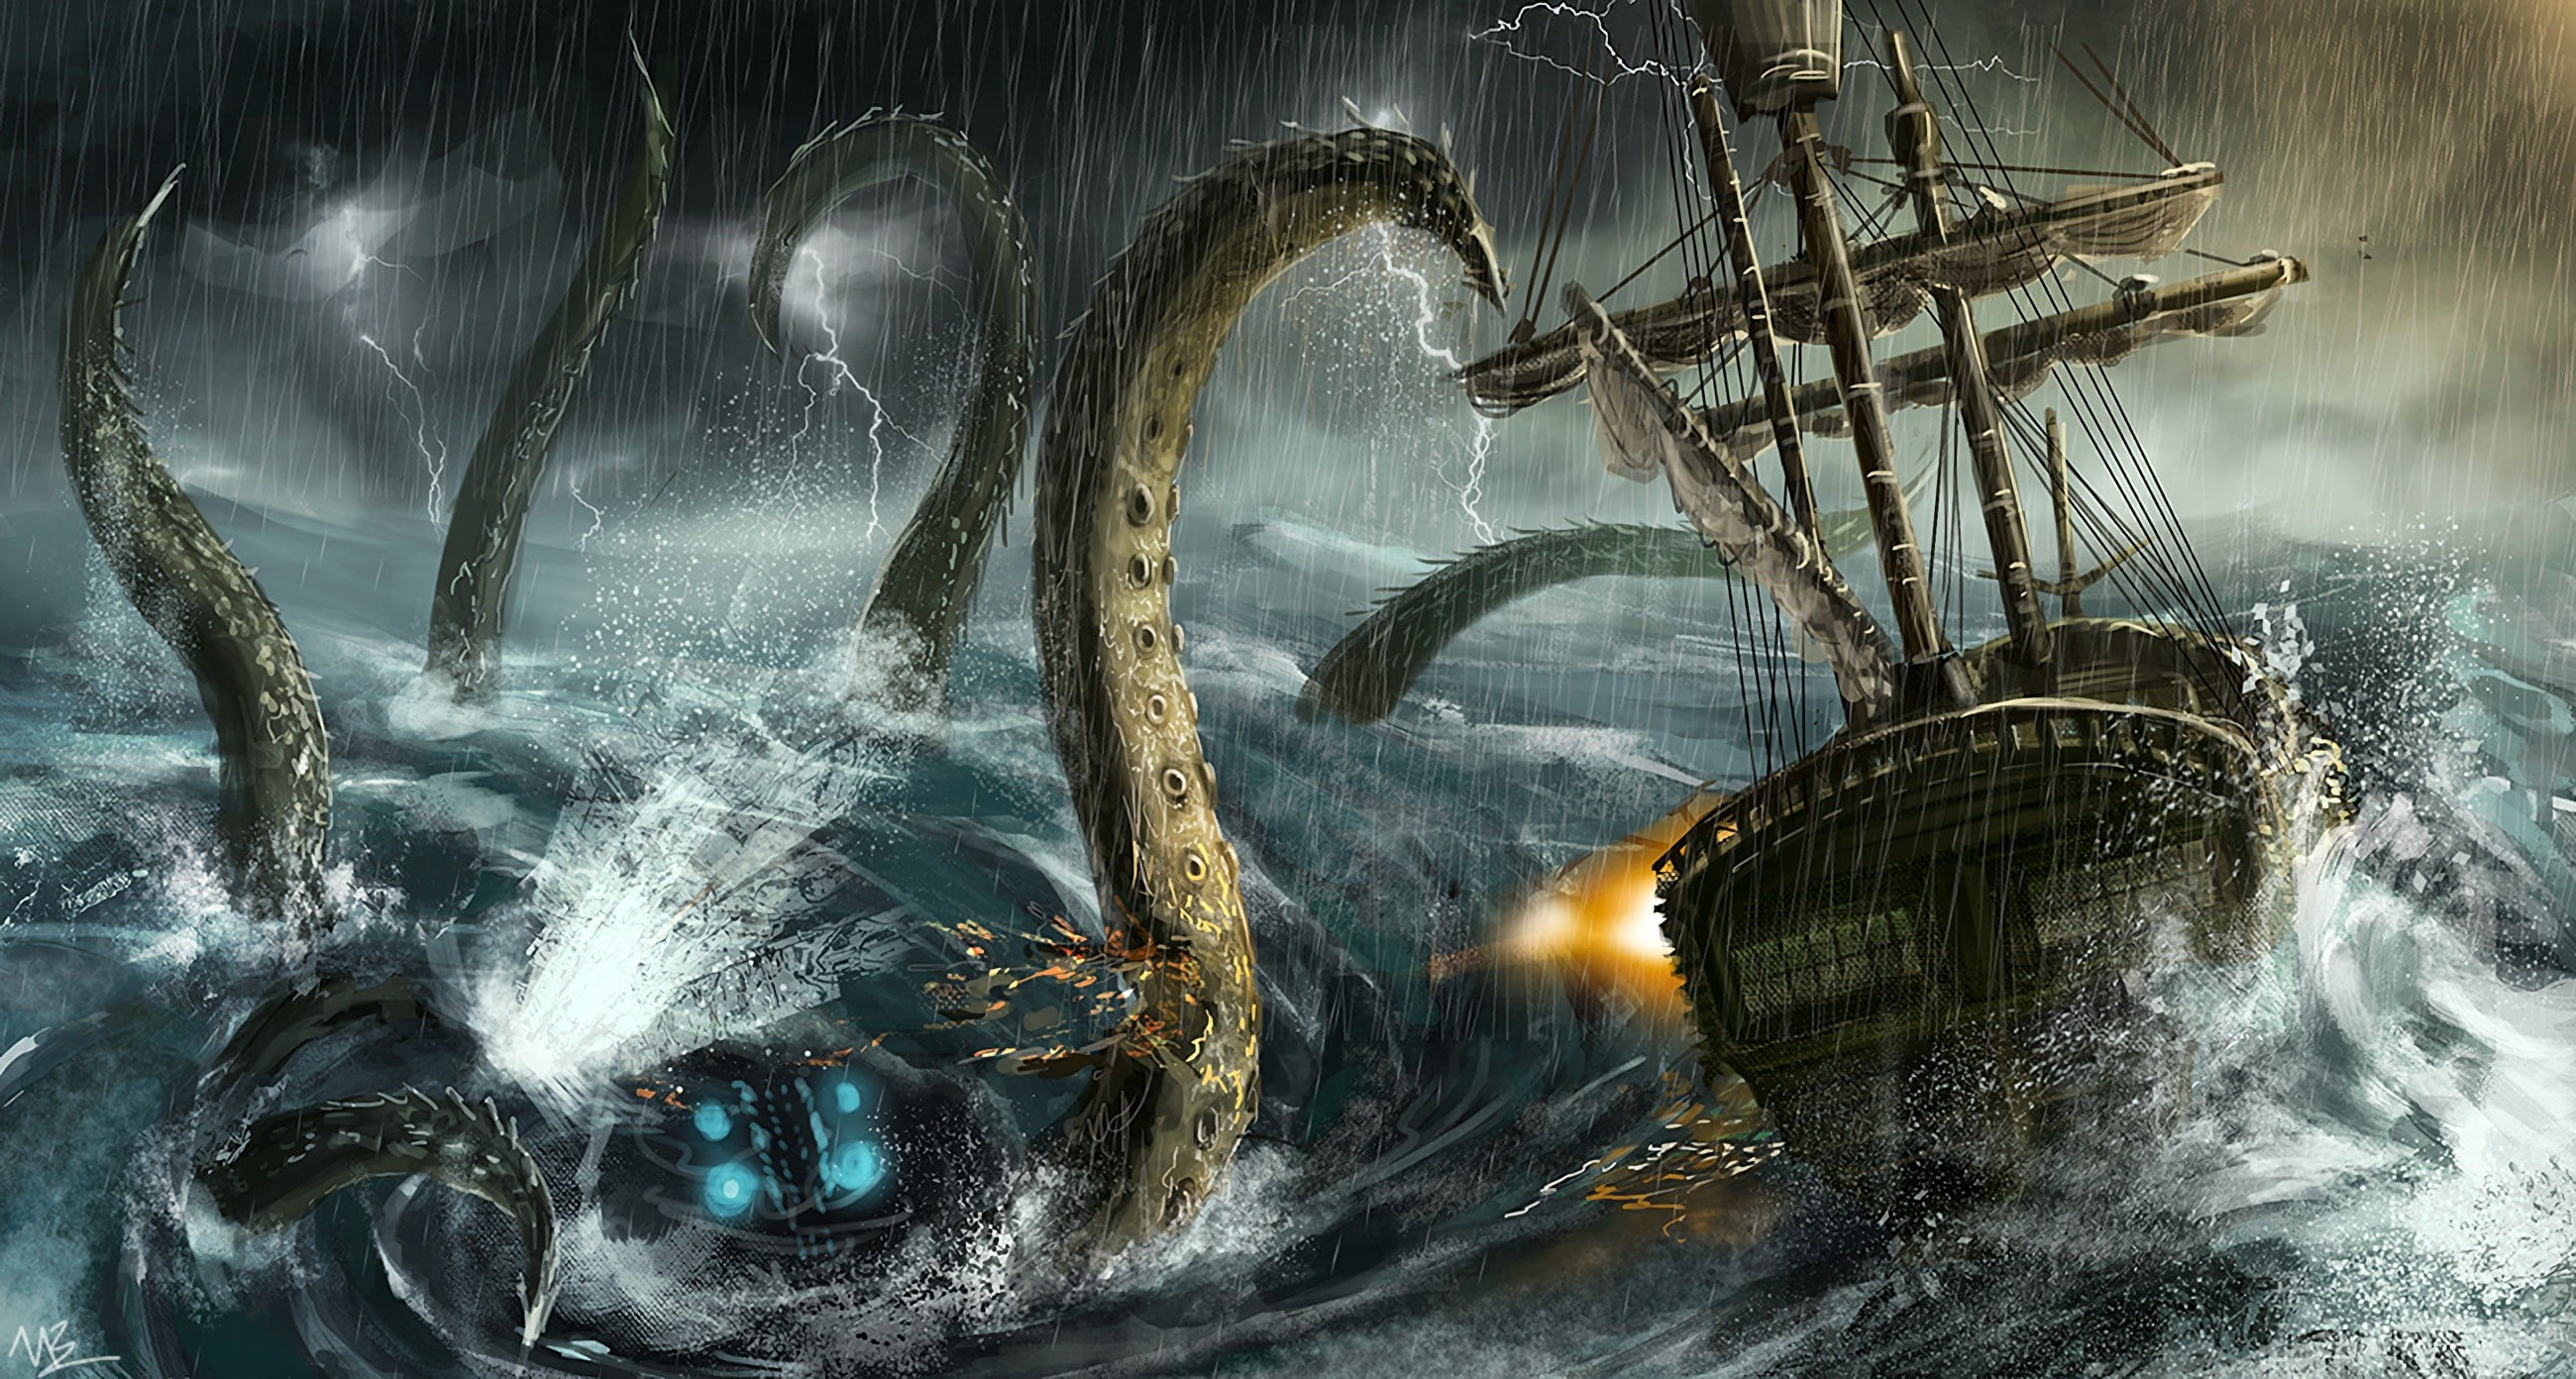 Kraken Attacking Sailing Ship Artwork Fantasy Art Sea Monster And